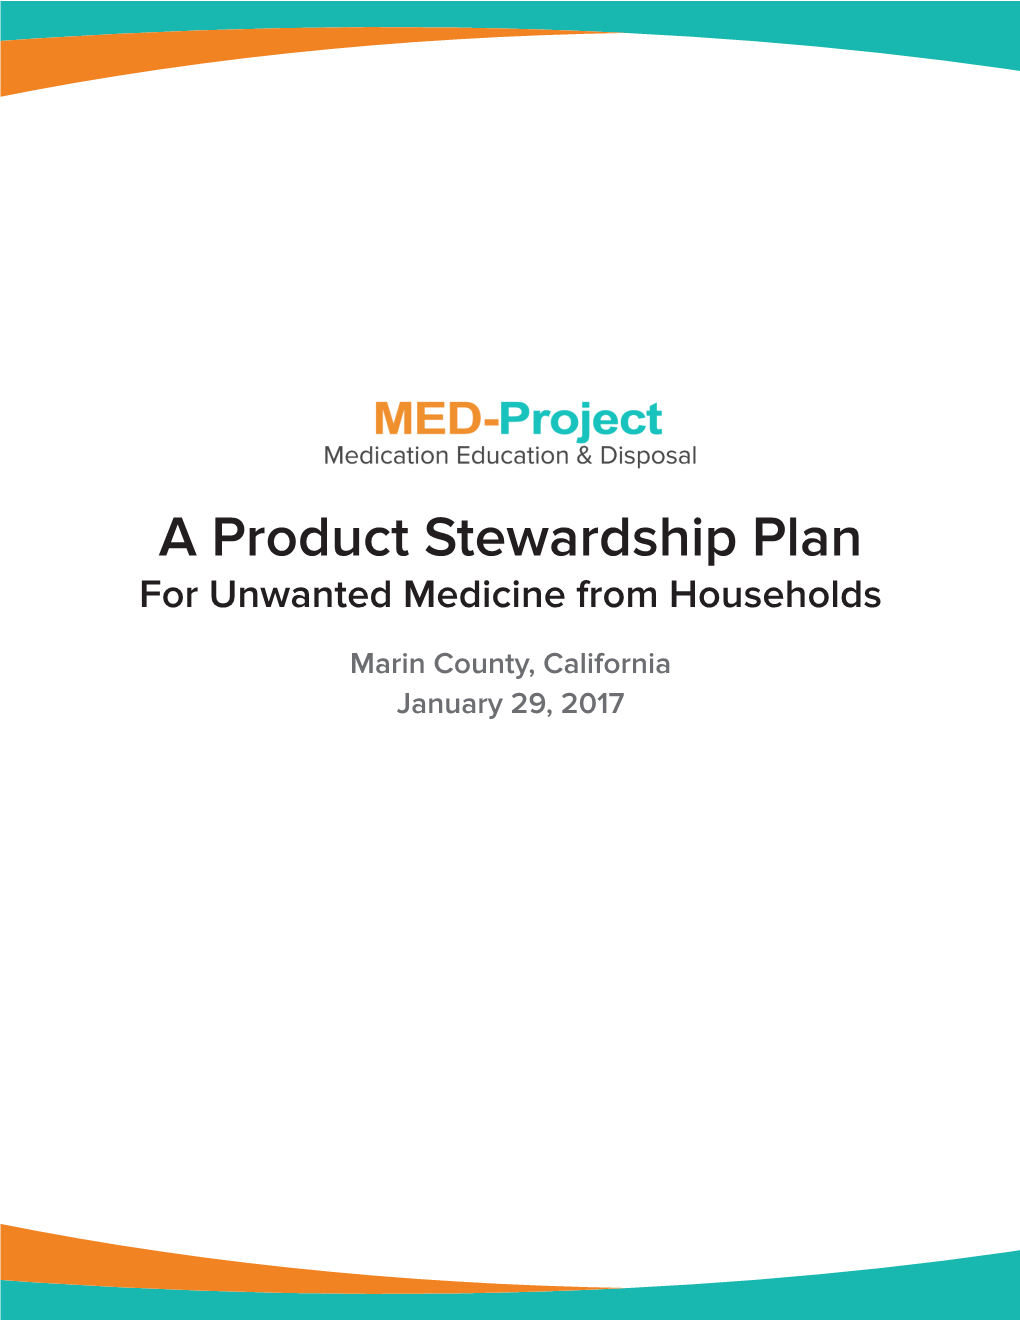 MED-Project Stewardship Plan